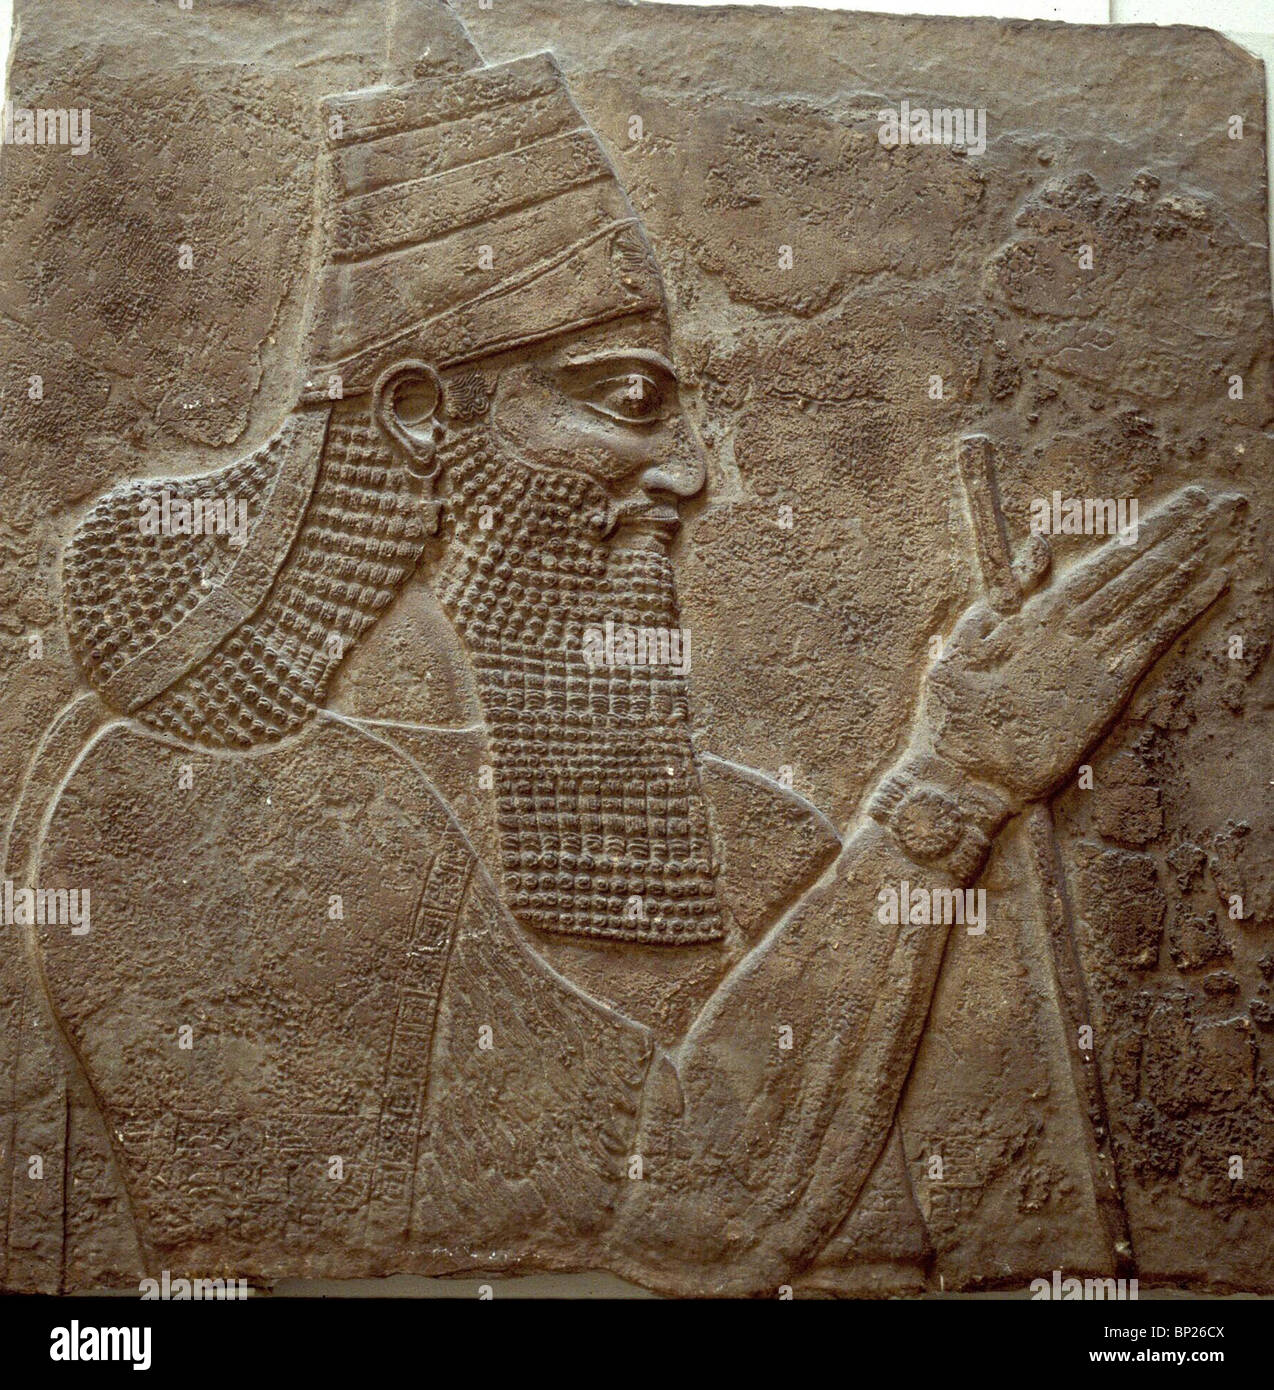 1012. KING TIGLATH PILESER III. 721 - 705 B.C. RELIEF FROM THE ROYAL PALACE IN NIMRUD, 730 B.C. Stock Photo